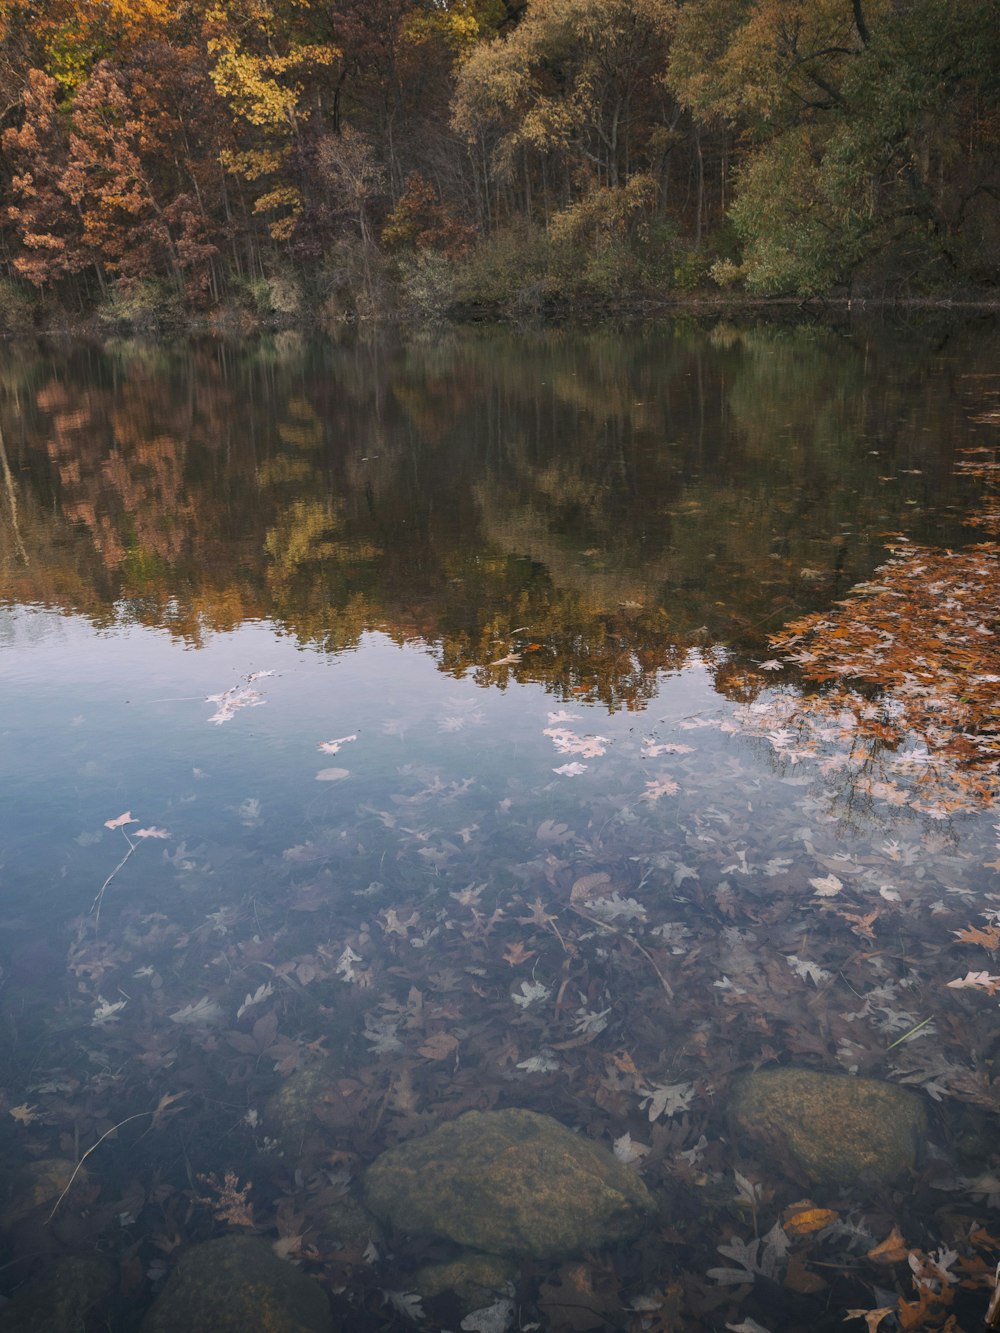 leaves in body of water reflecting treeline